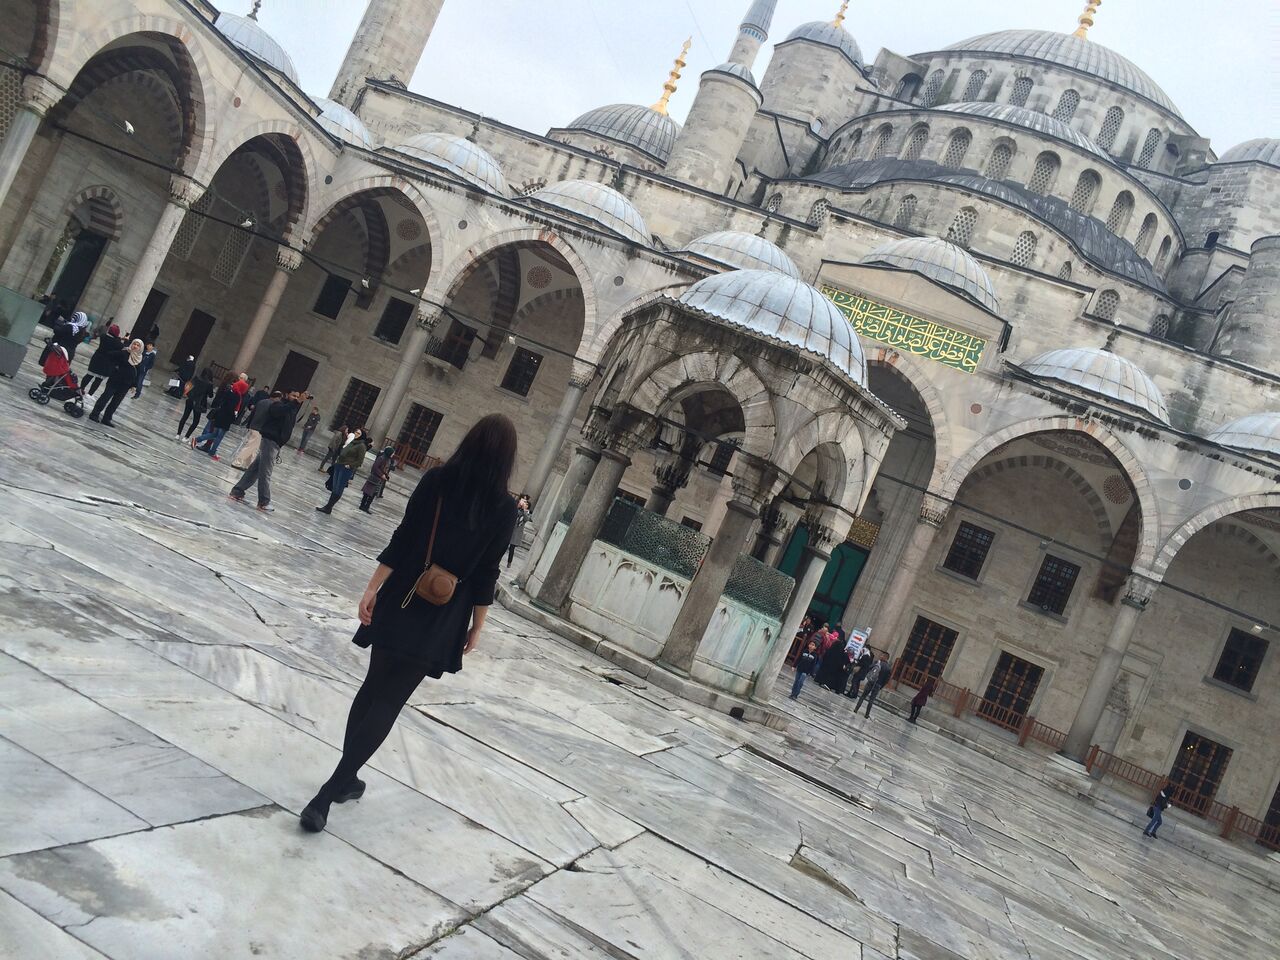 Advice from Experienced Traveler on Instanbul Turkey